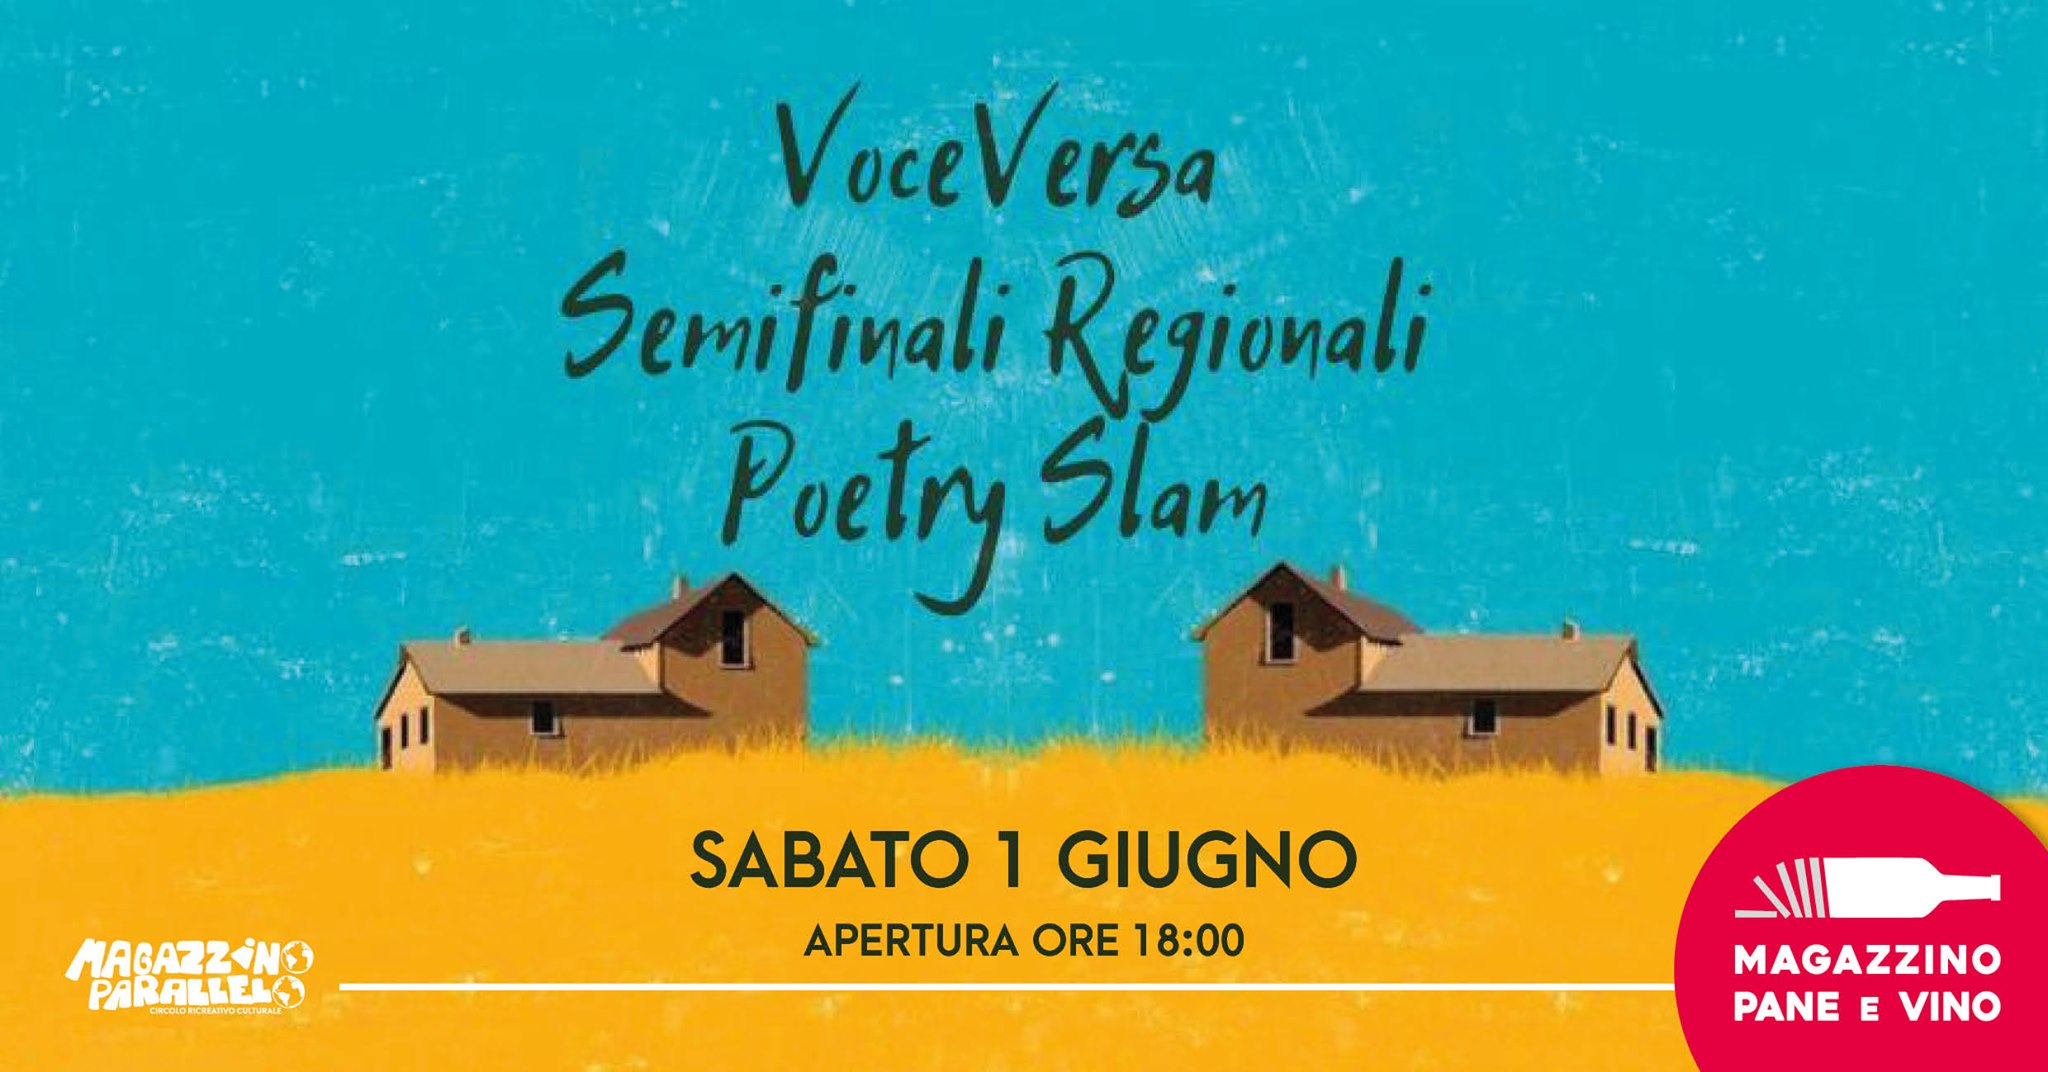 VoceVersa: semifinali regionali Poetry Slam